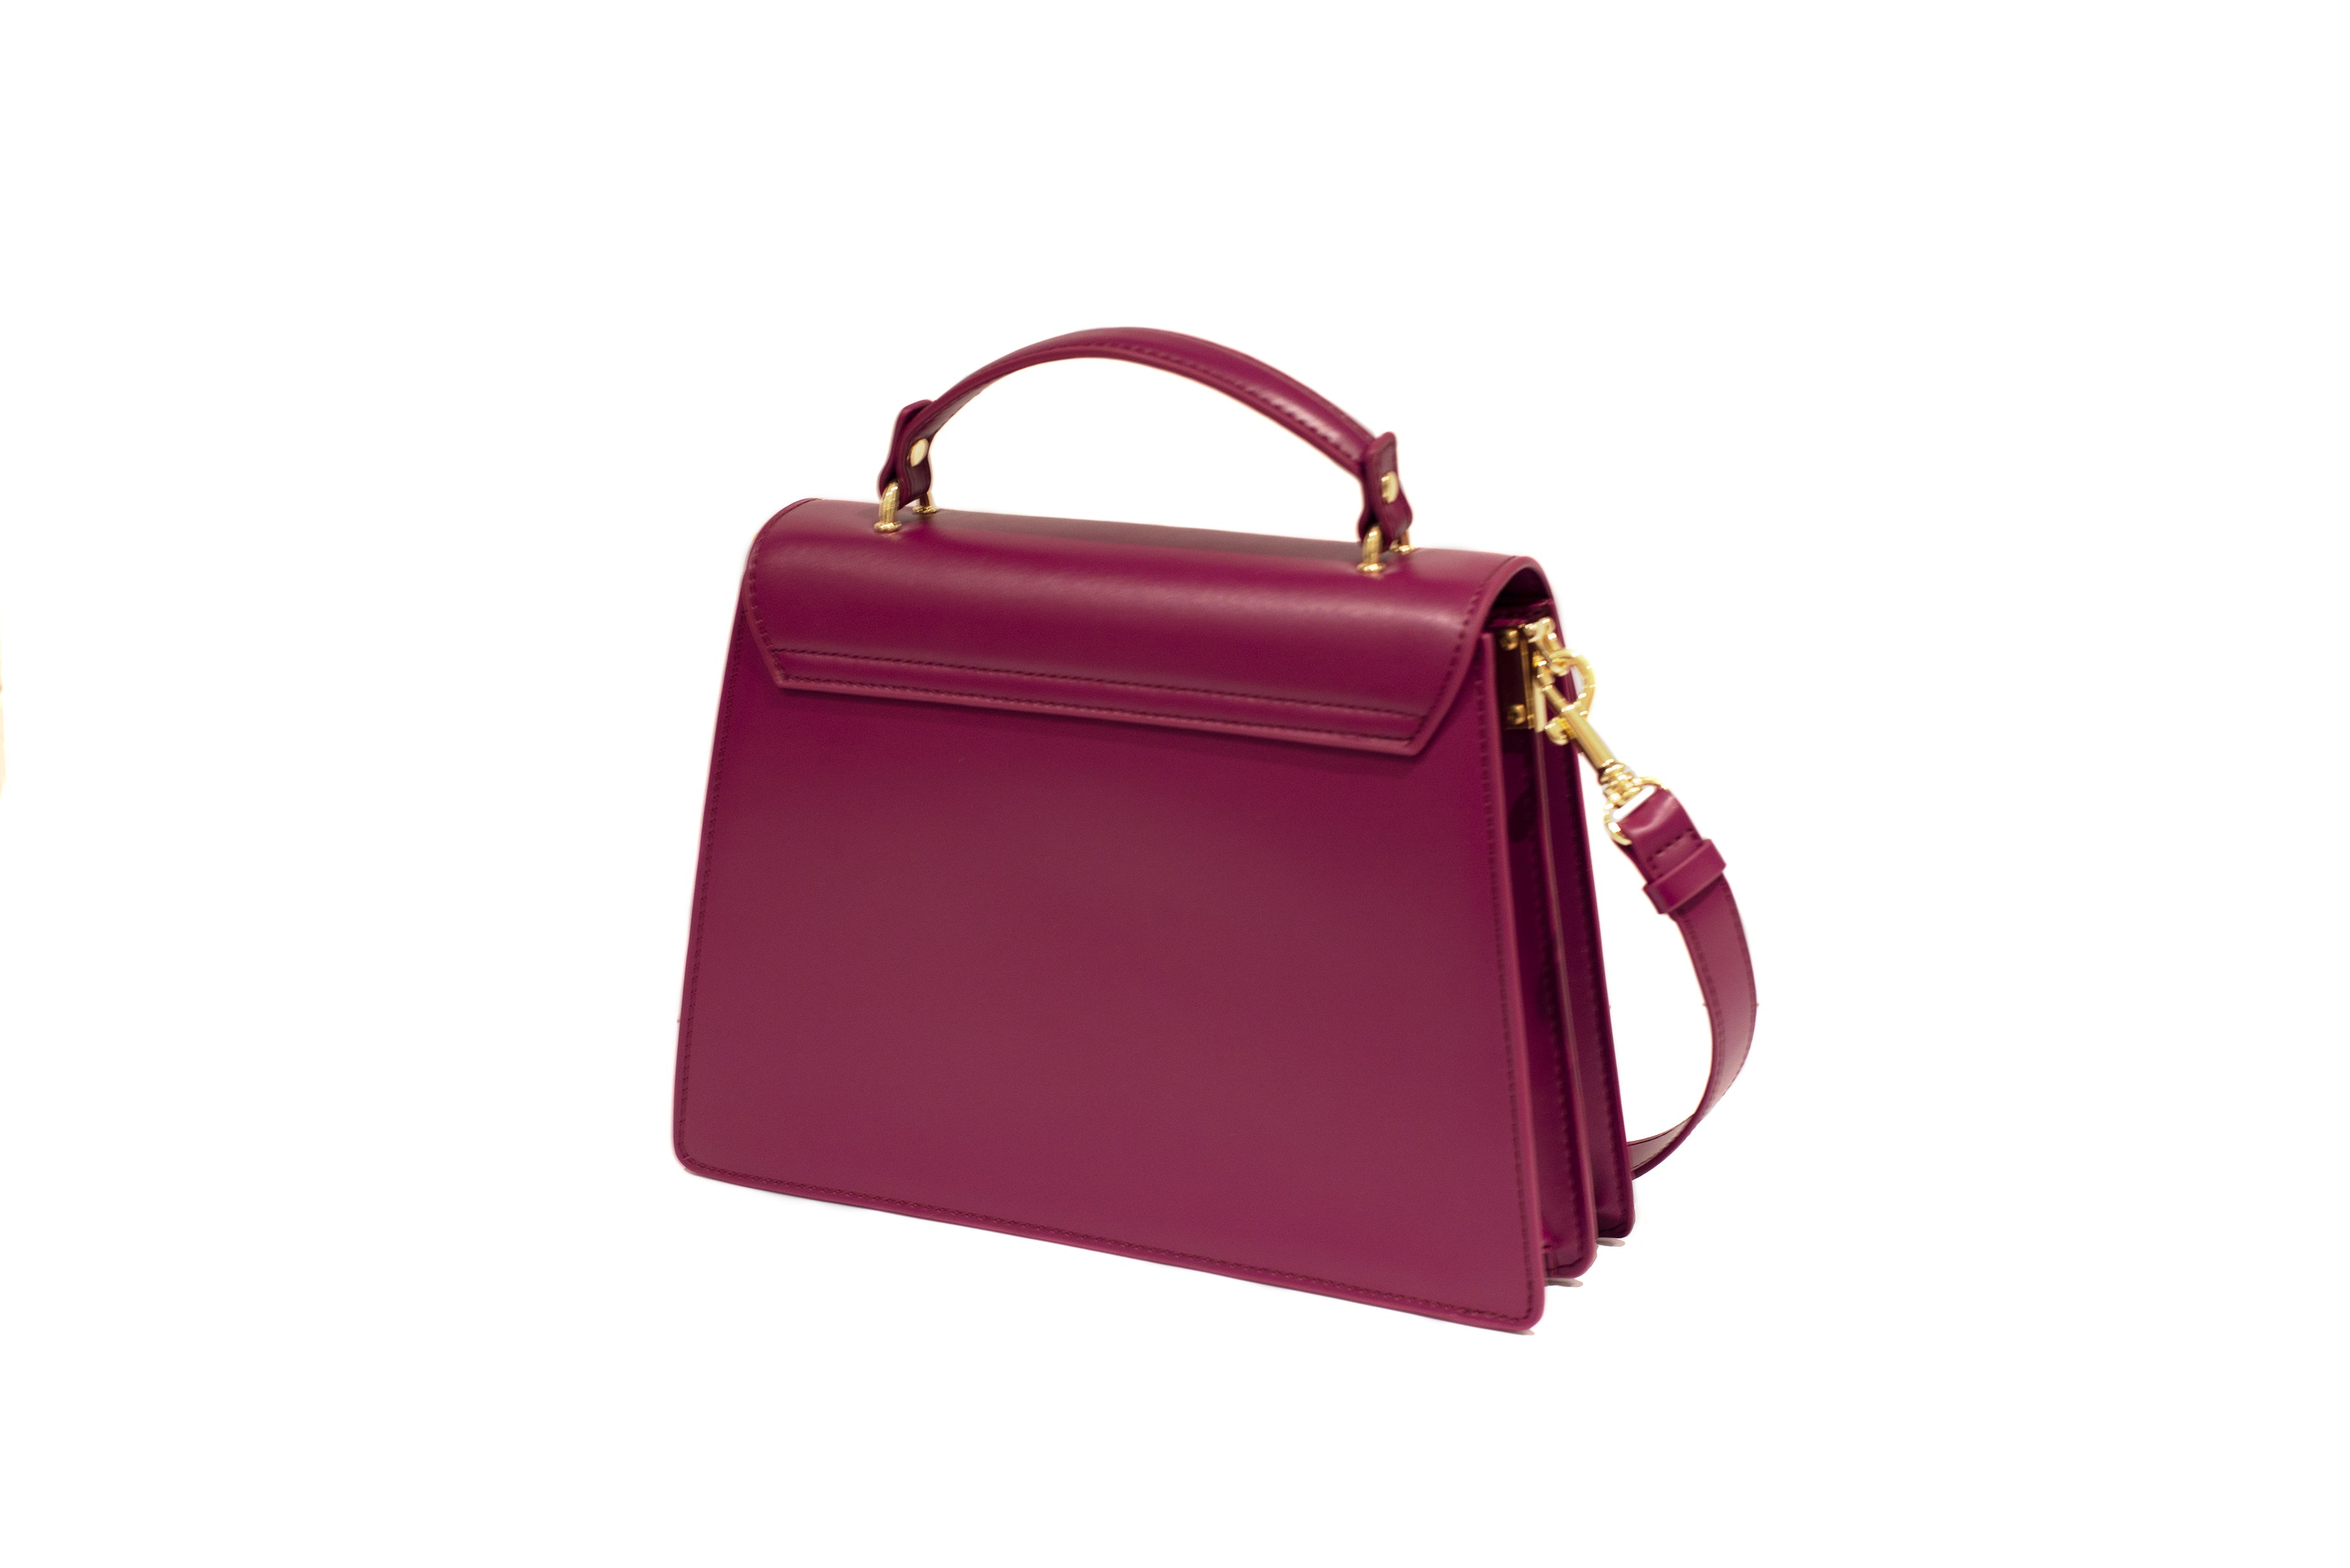 Amelia Hunt: Burgundy classic handbag